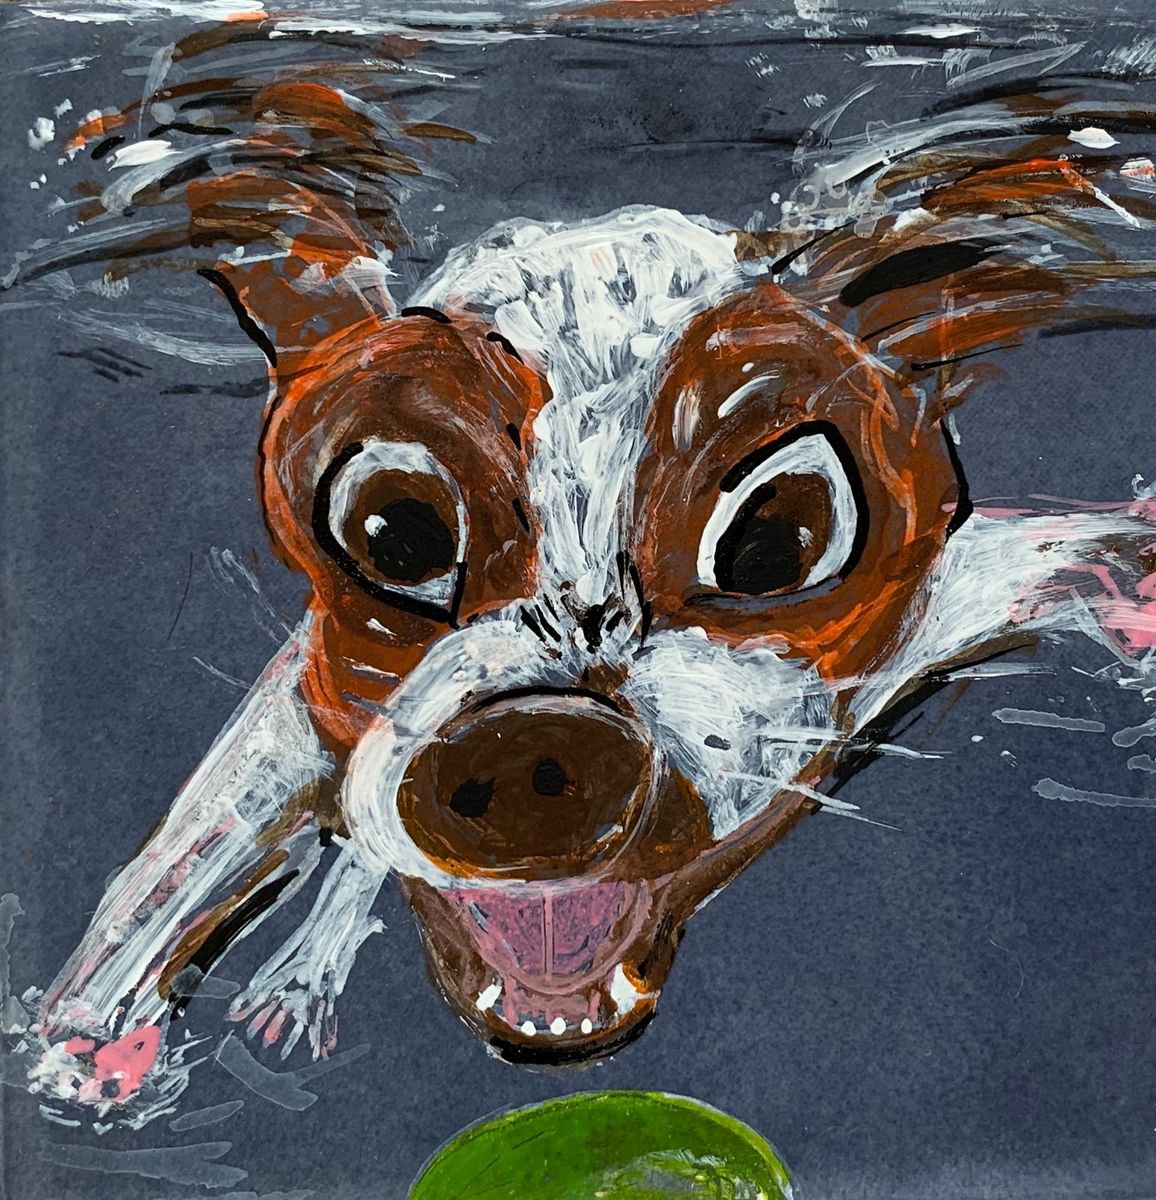 Pets Portrait Acrylic Painting of Dog Underwater Catch Tennis Ball Fun Art Home Decor Gift... by Kumi Muttu